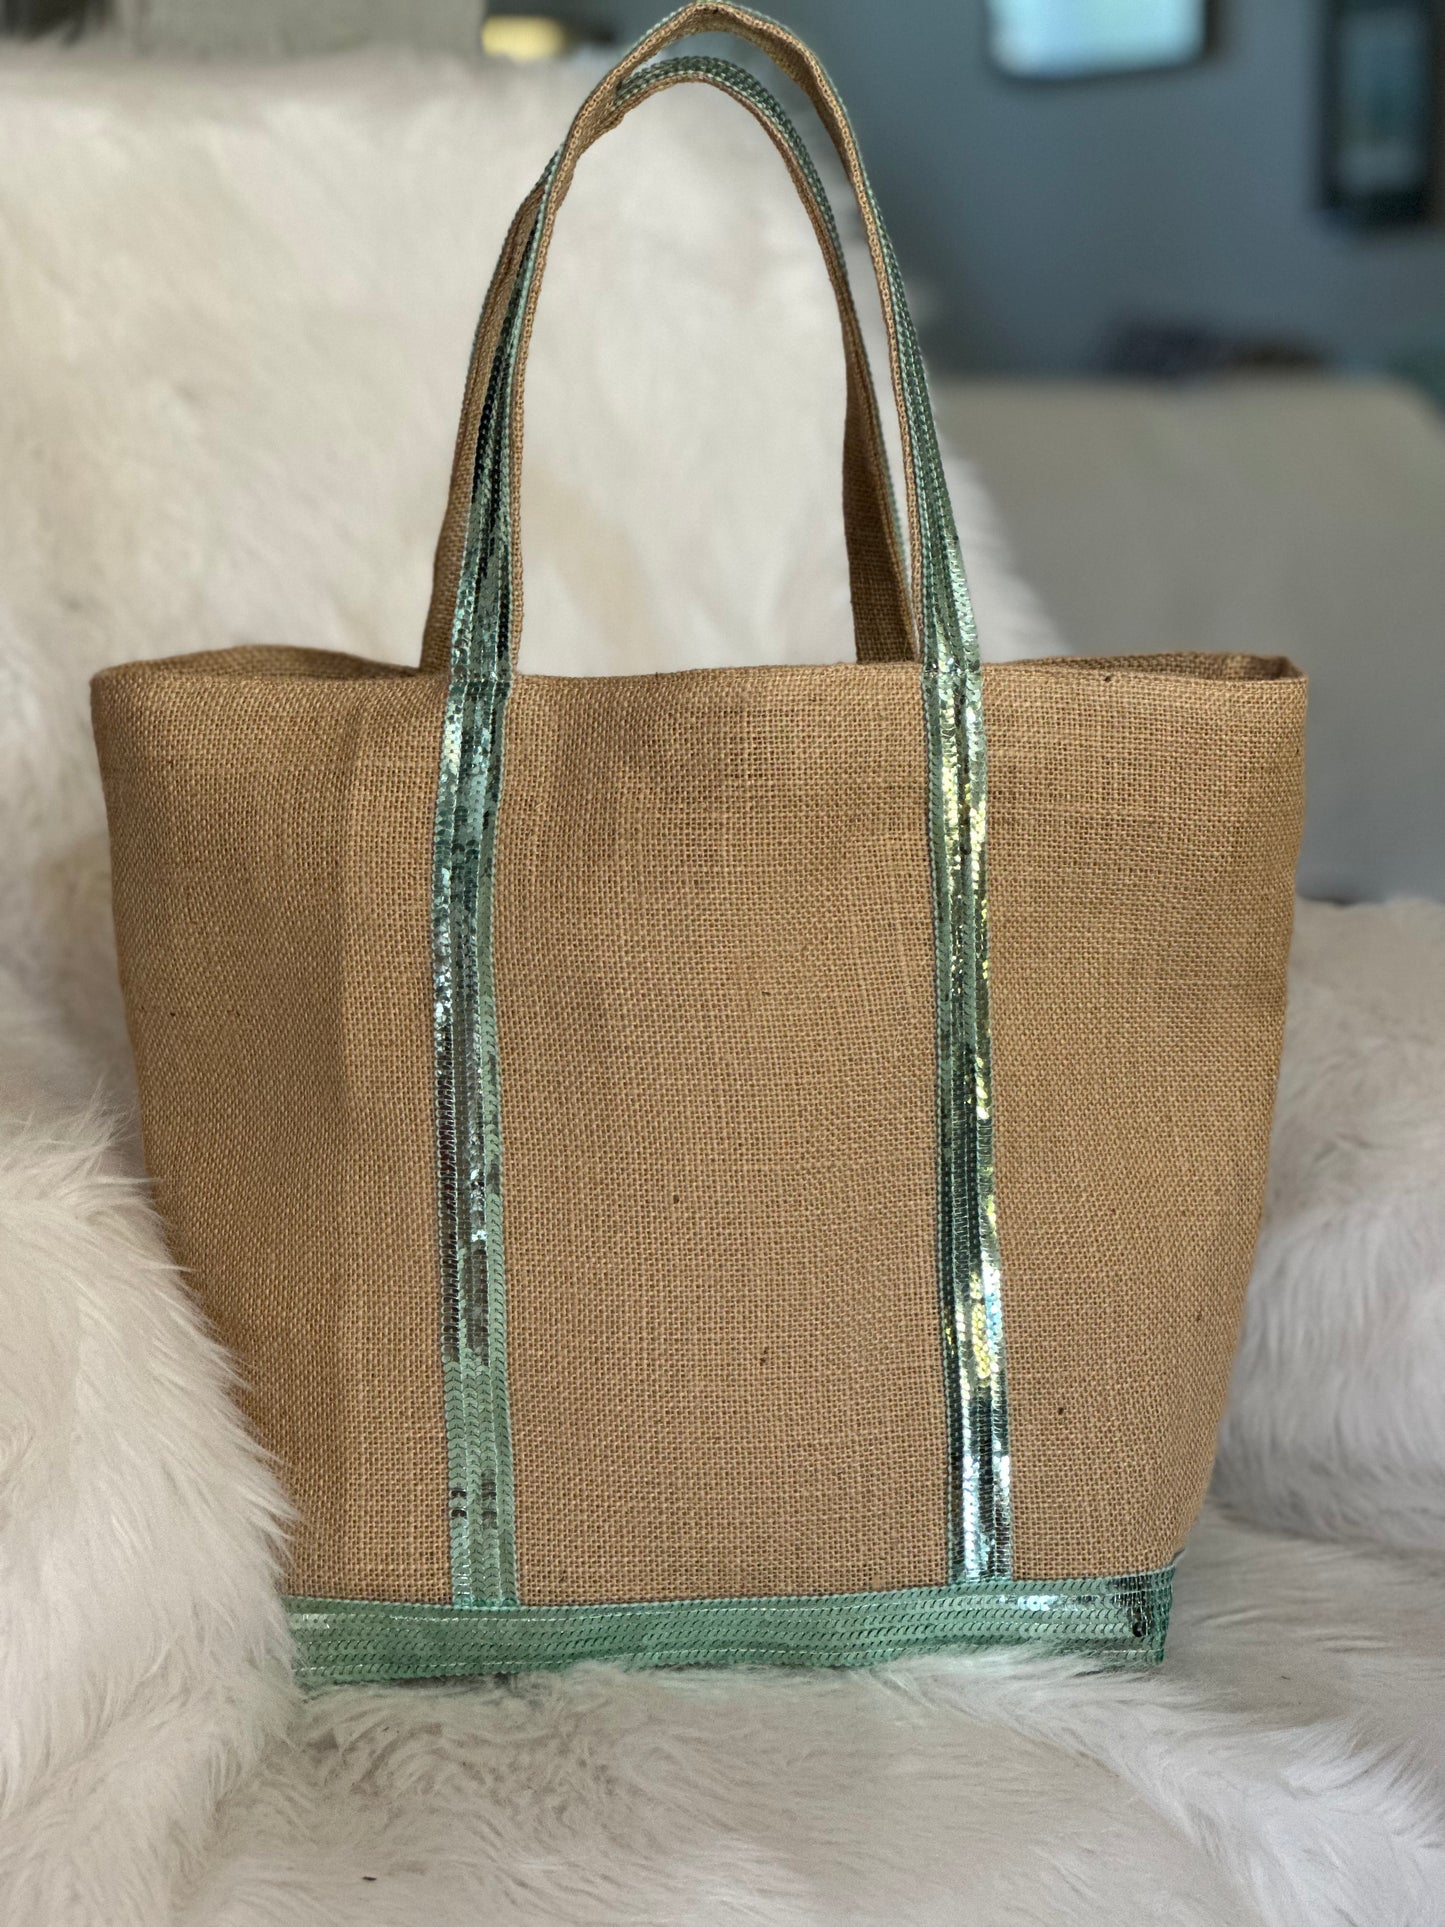 Burlap shopping bag, mint green sequins